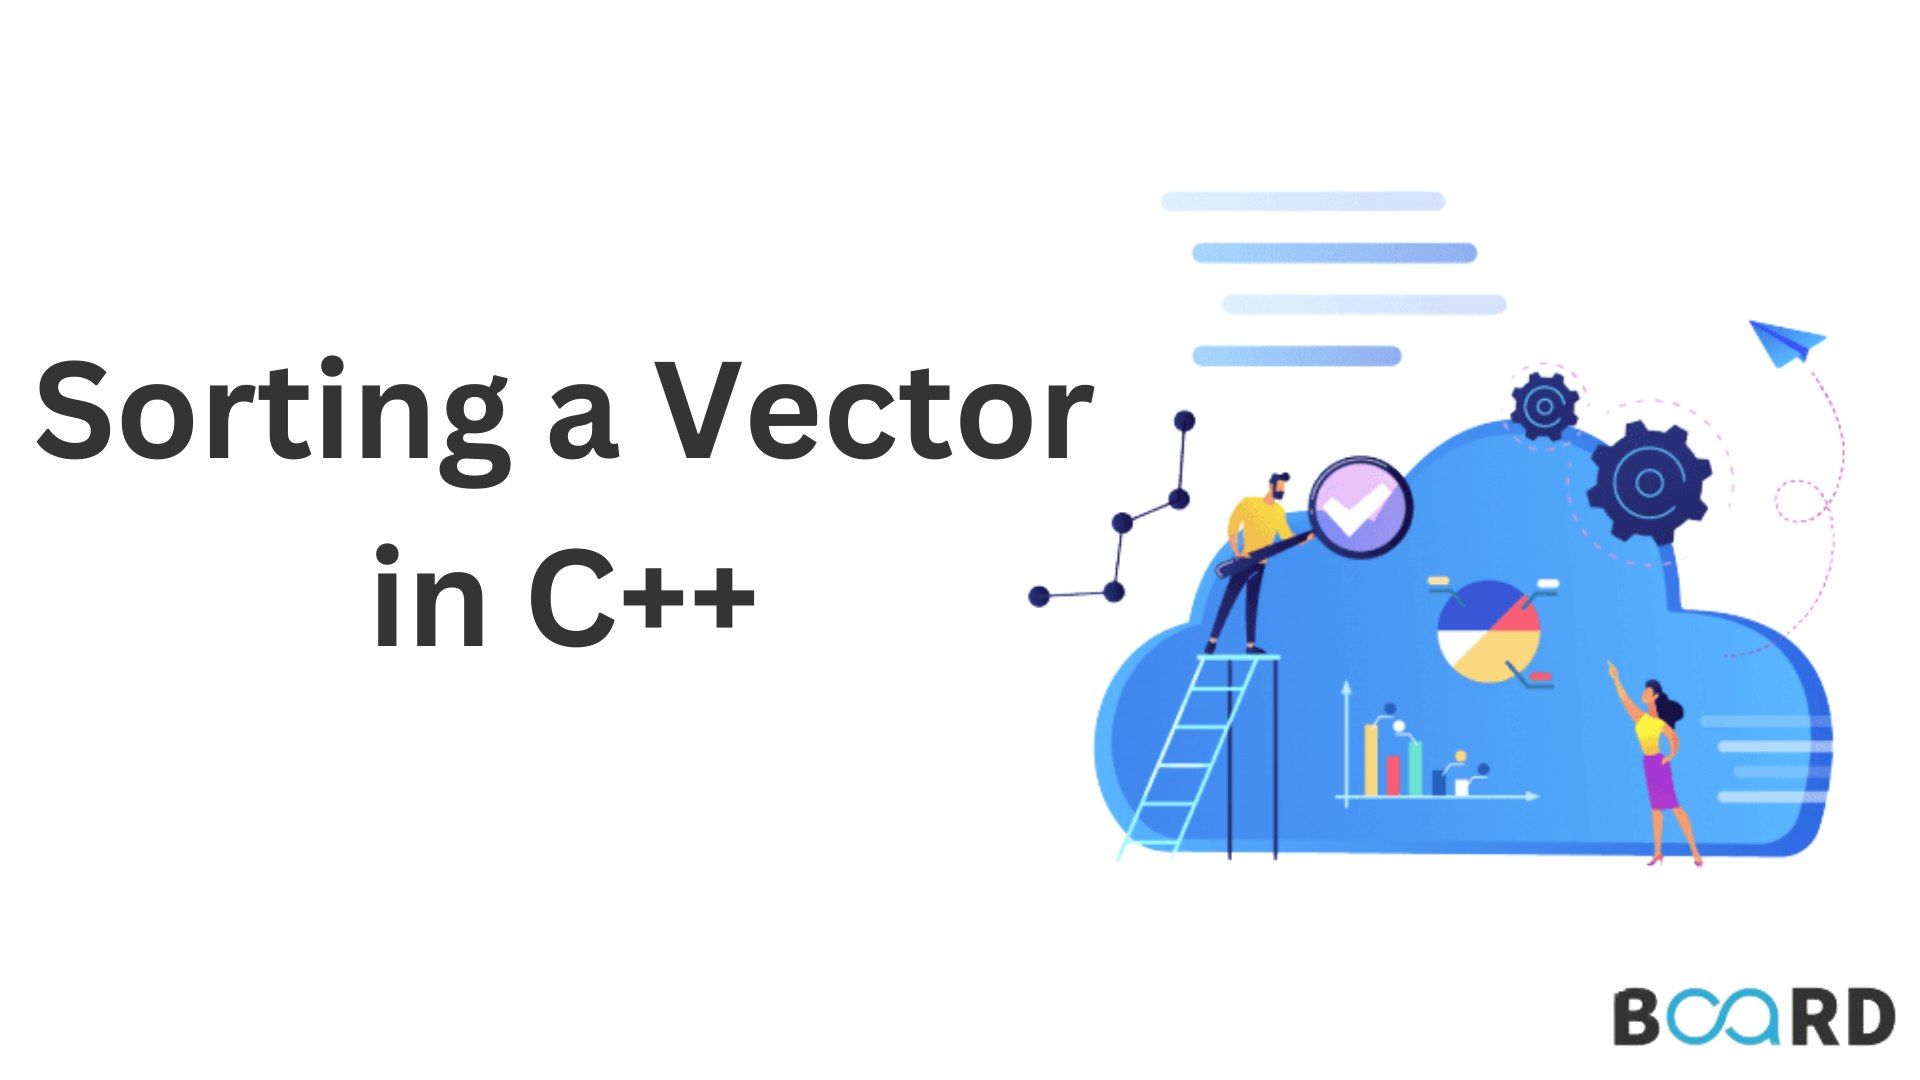 How to Sort a Vector in C++